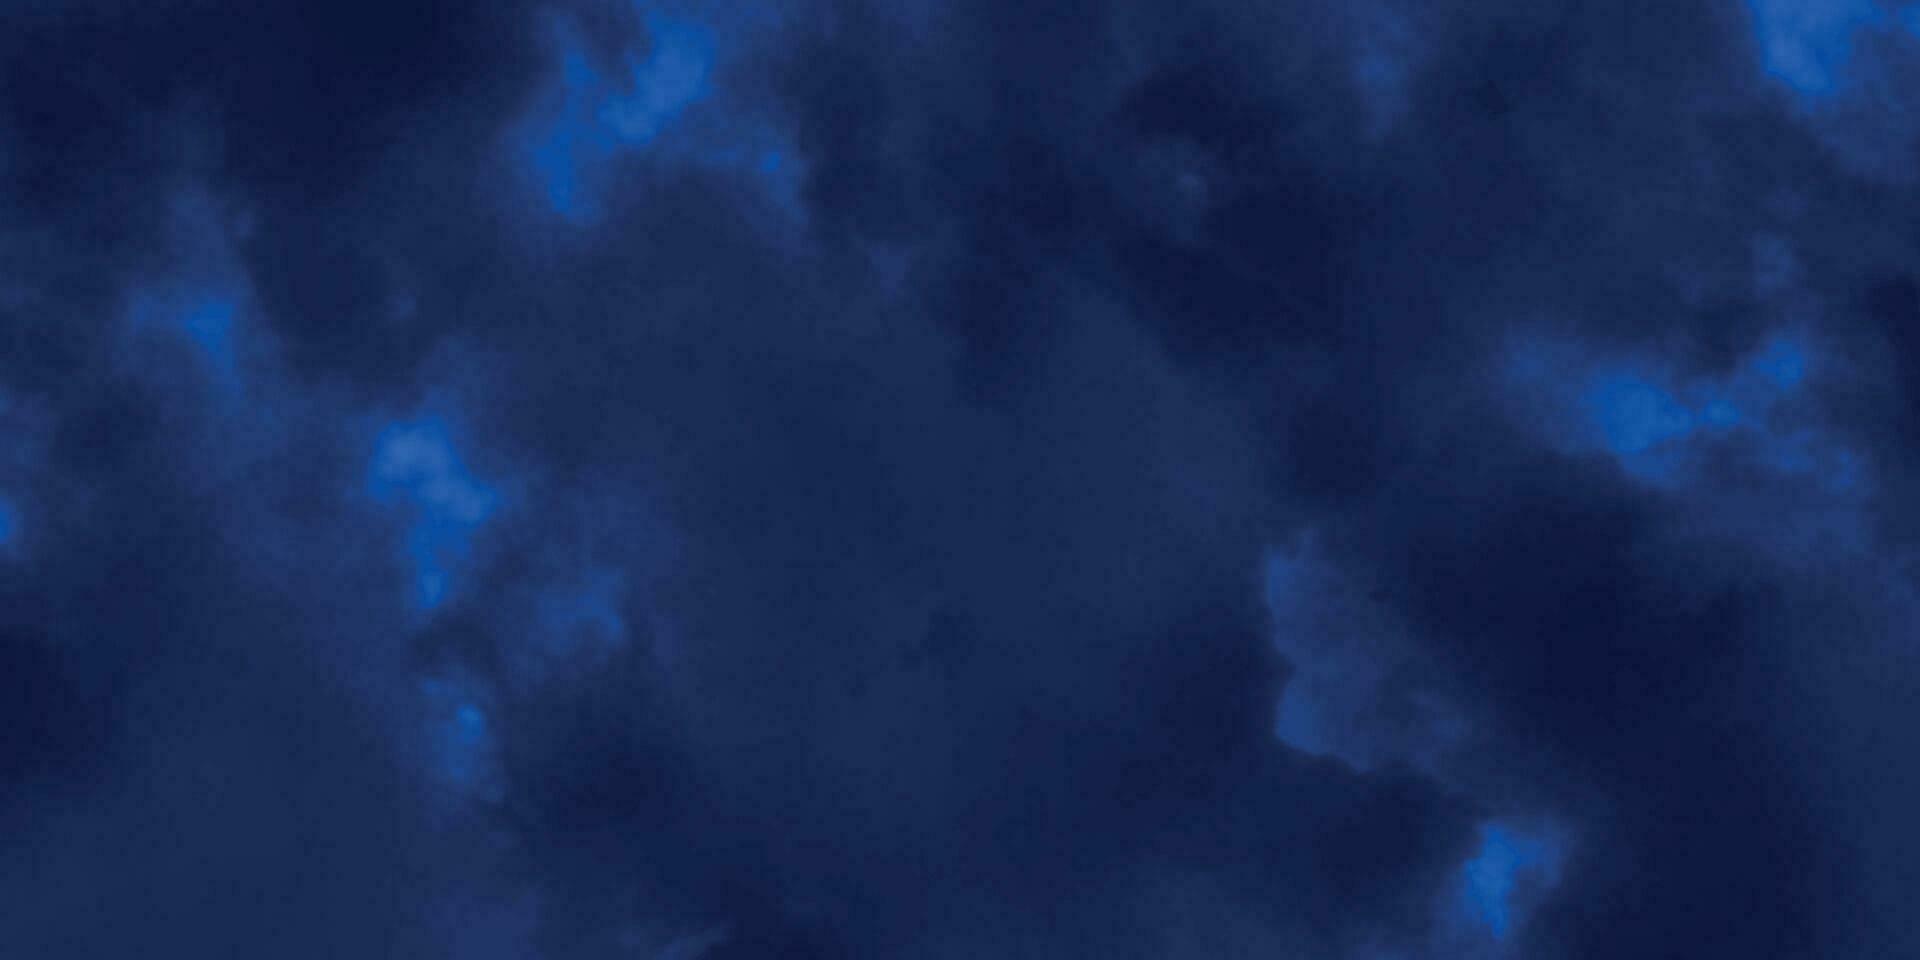 Dark Blue Watercolor Background. Watercolor Wash Aqua Painted Texture Close Up, Grungy Design. Abstract Blue Vintage Grunge Texture Background. Cover, Poster, Flyer, vector